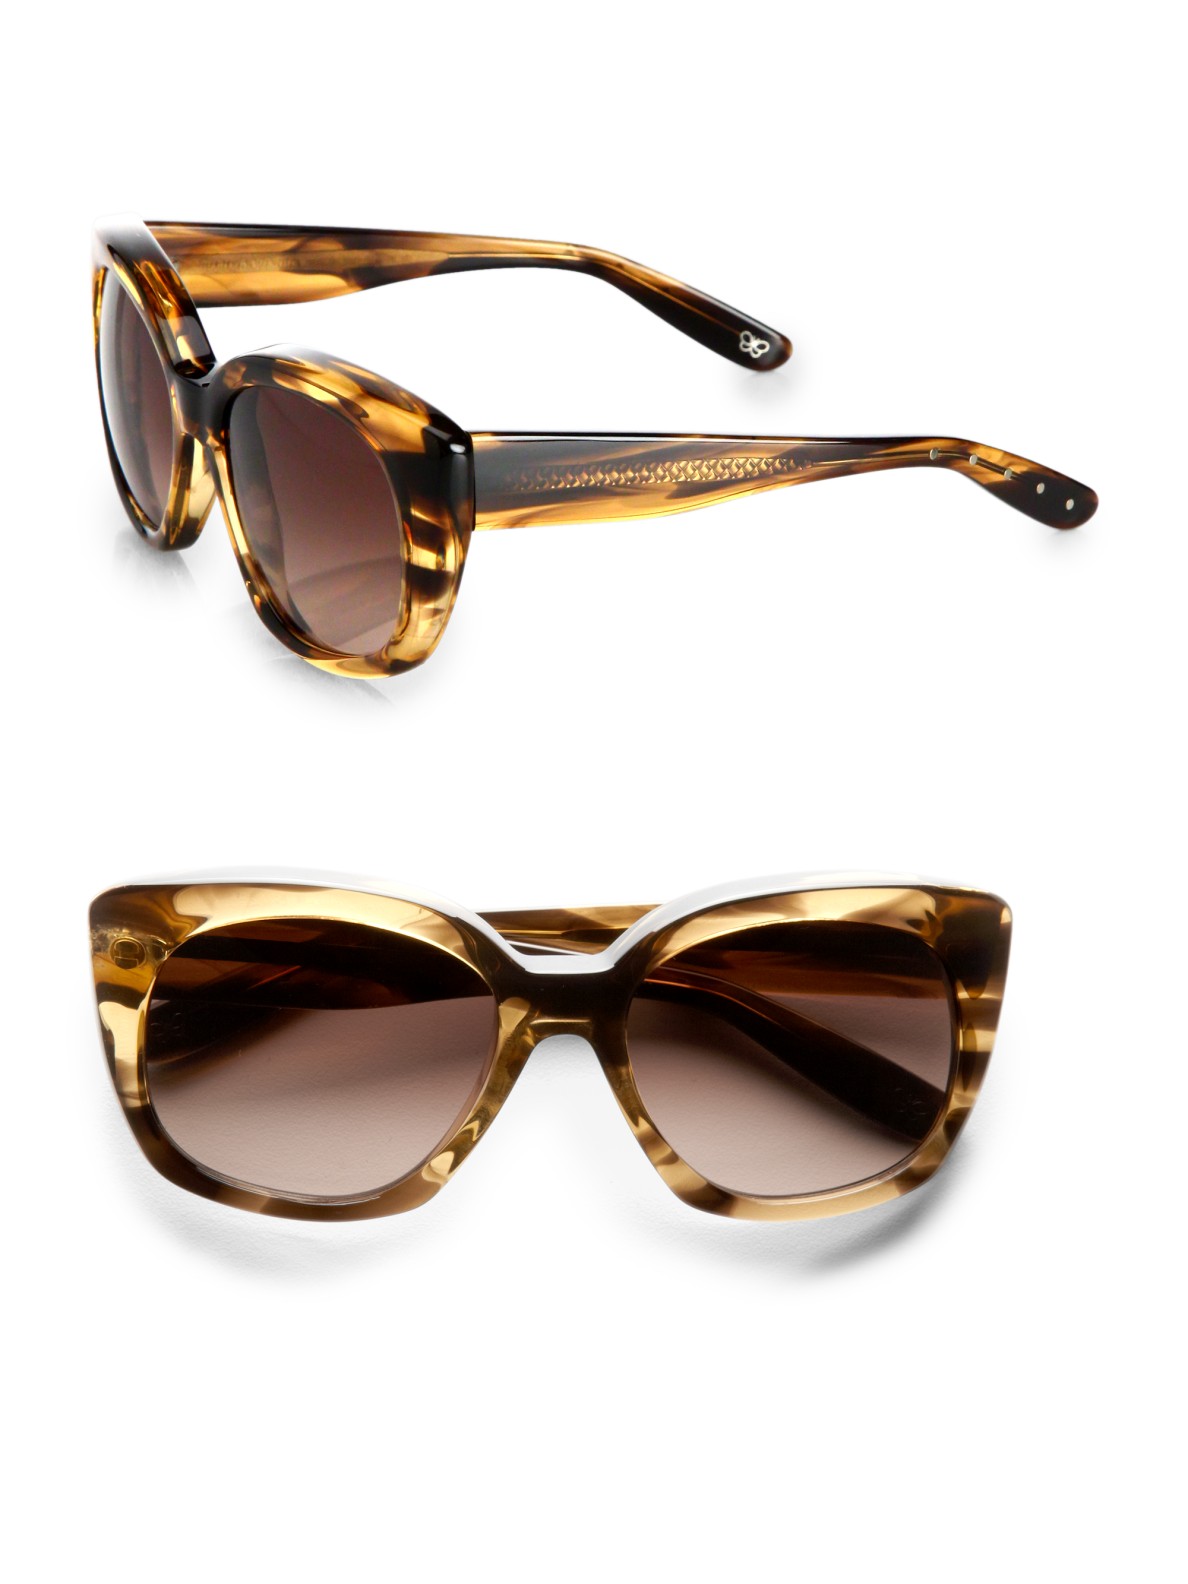 Lyst - Bottega veneta Catseye Acetate Sunglasses in Brown